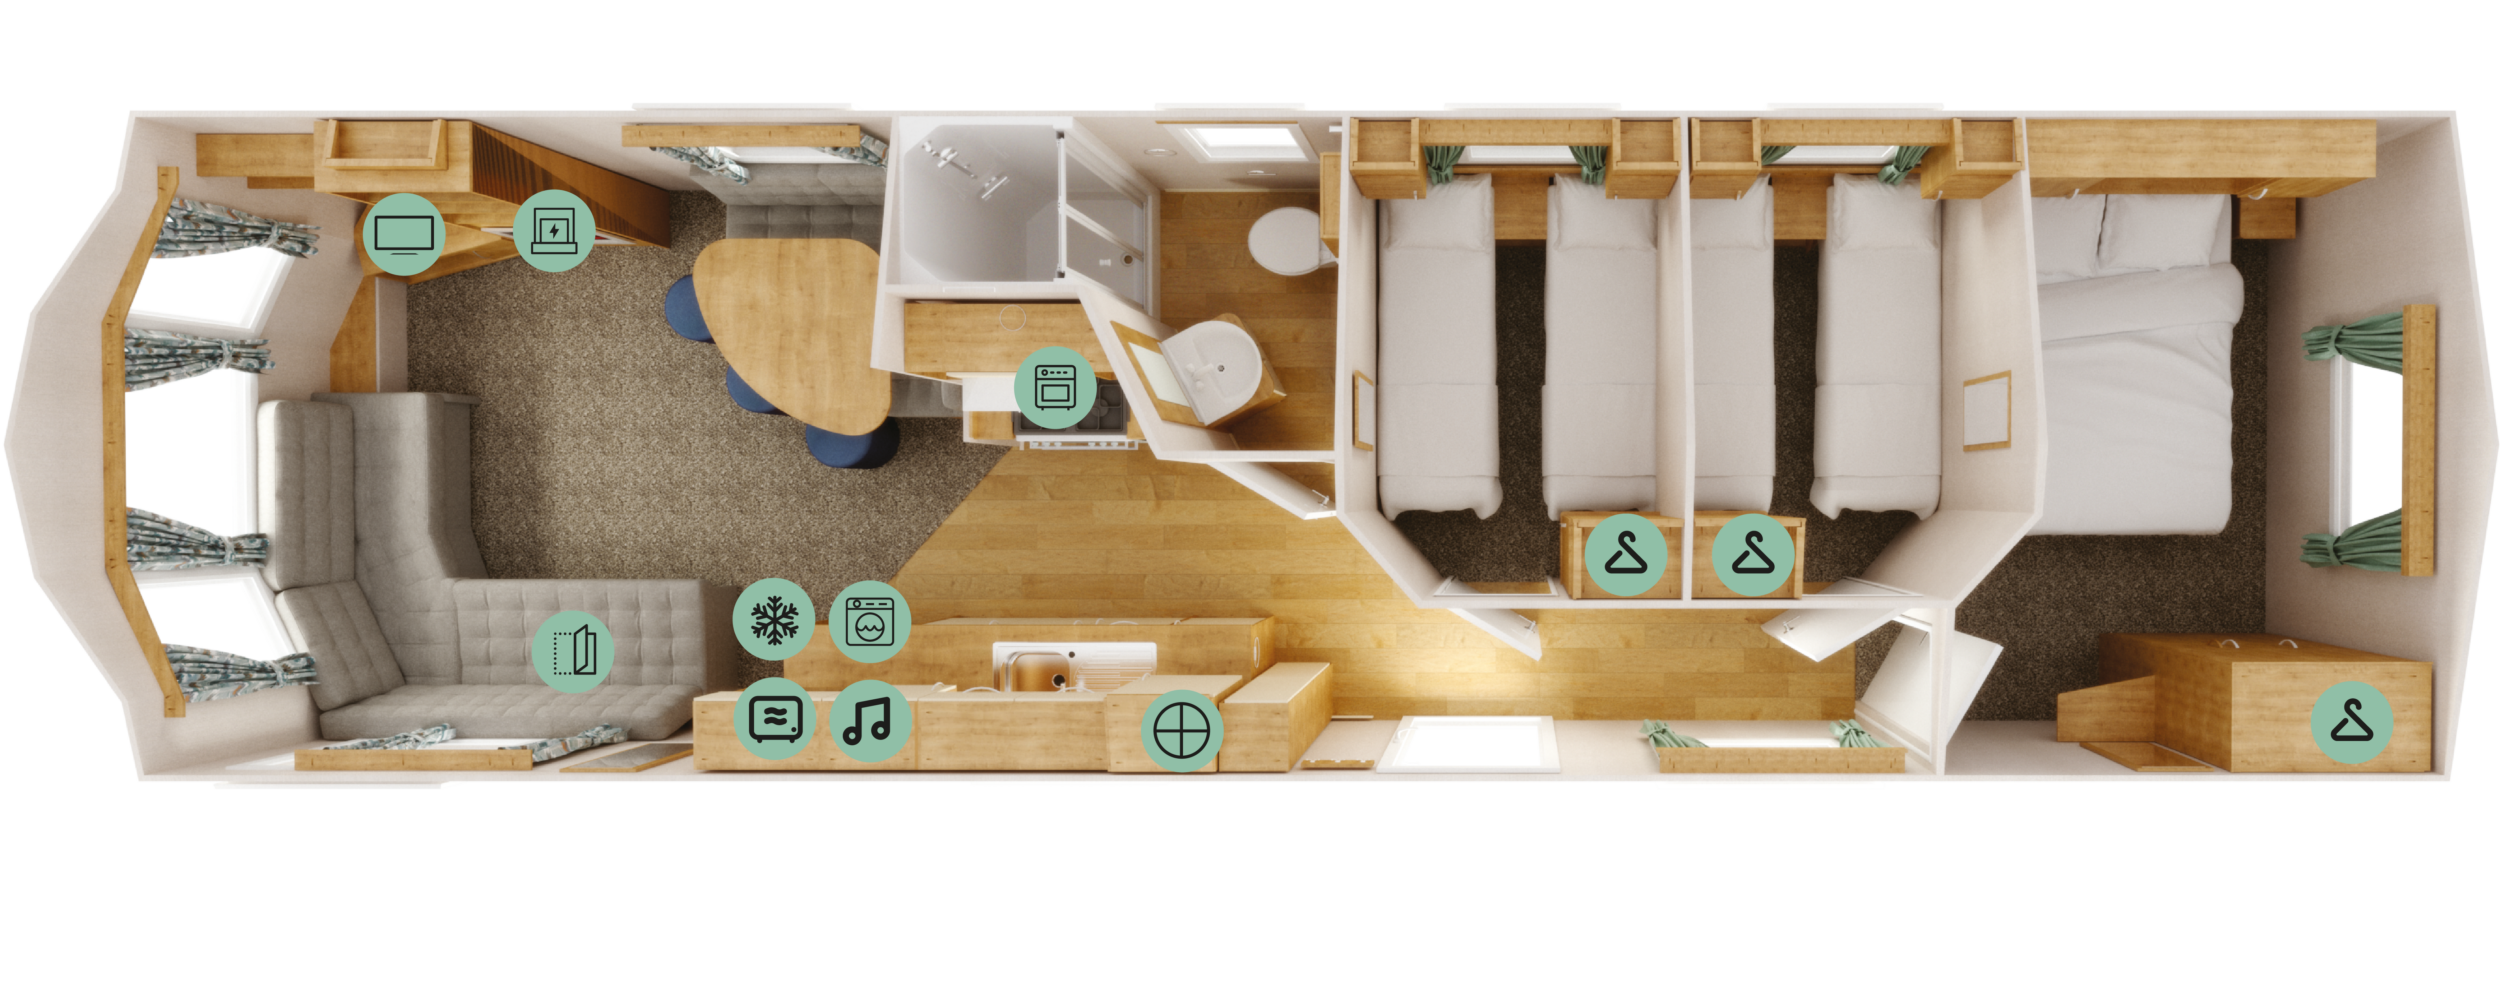 New Willerby Ashurst 35x10 3 bedroom static caravan floorplan